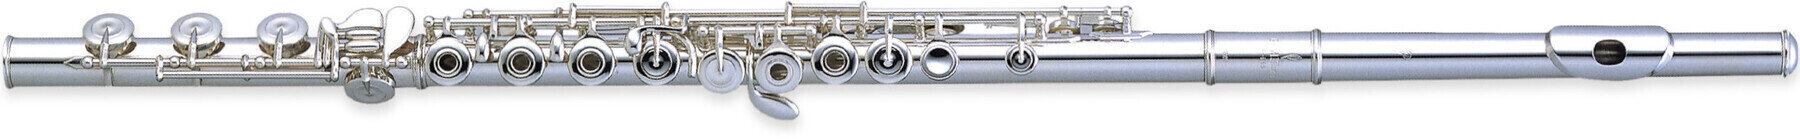 Concert flute Pearl Flute F665RBE Concert flute